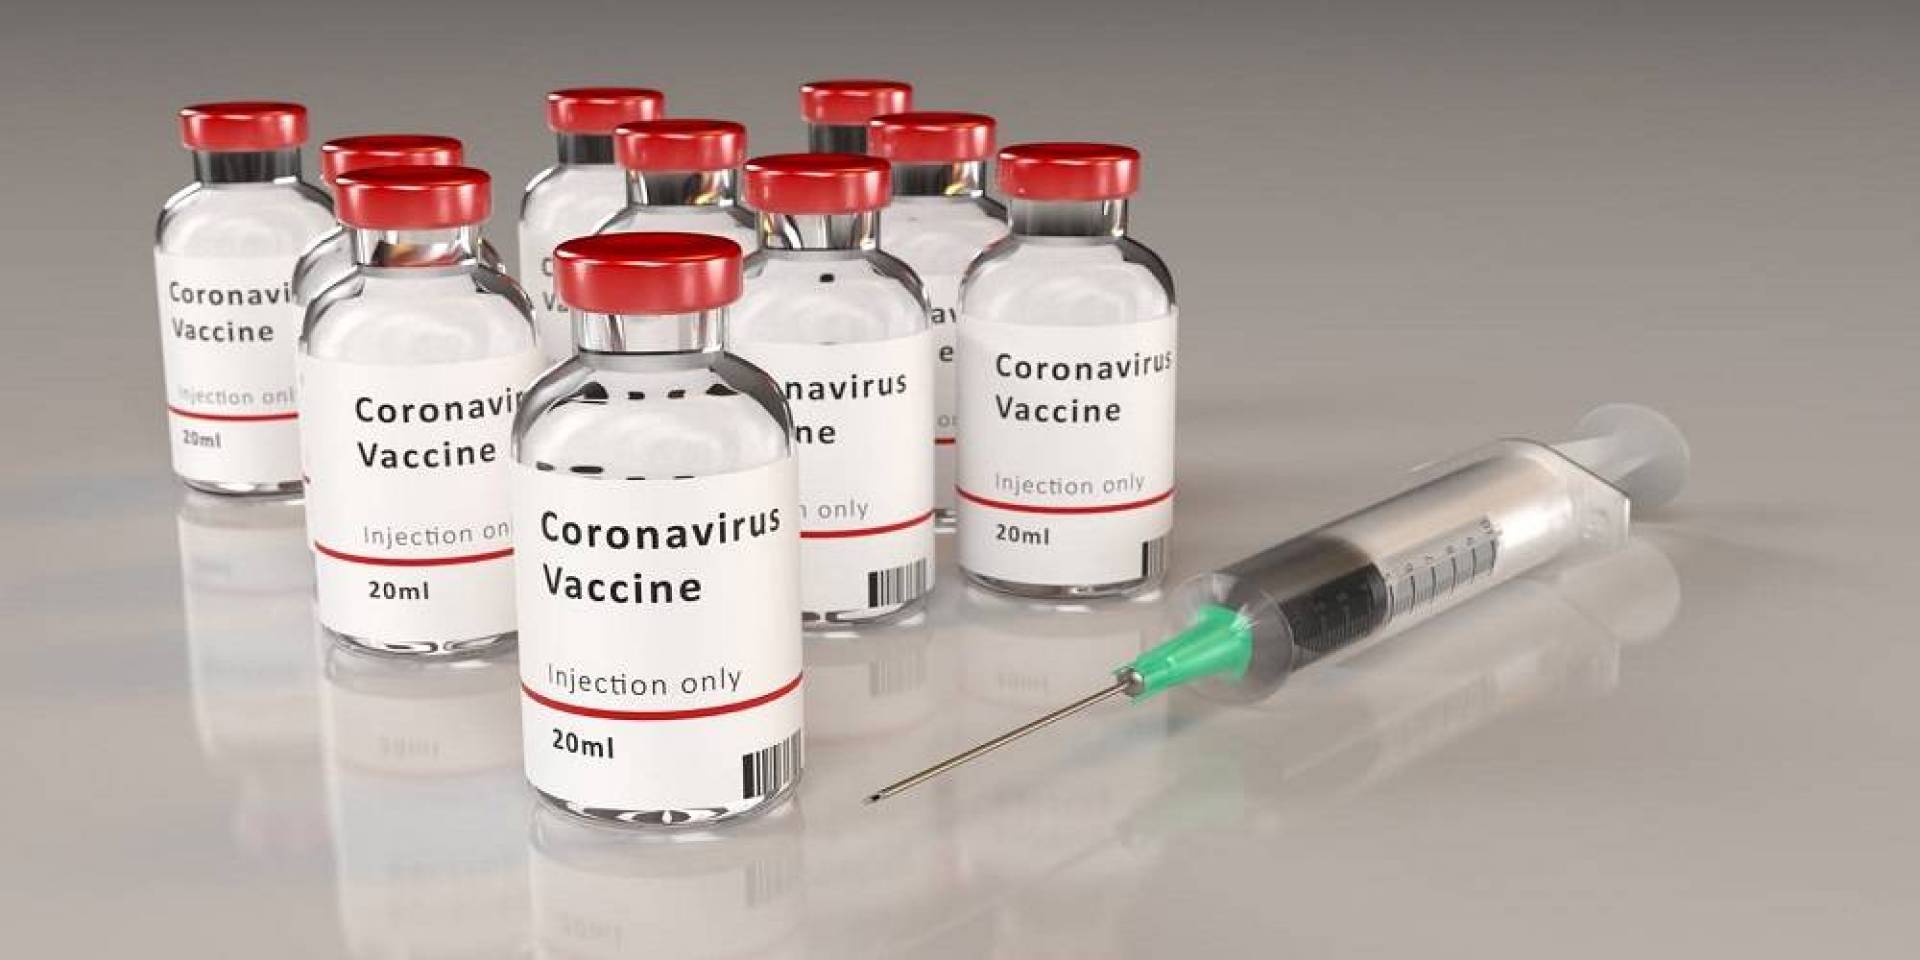 127-122102-death-first-volunteer-oxford-vaccine-corona-3